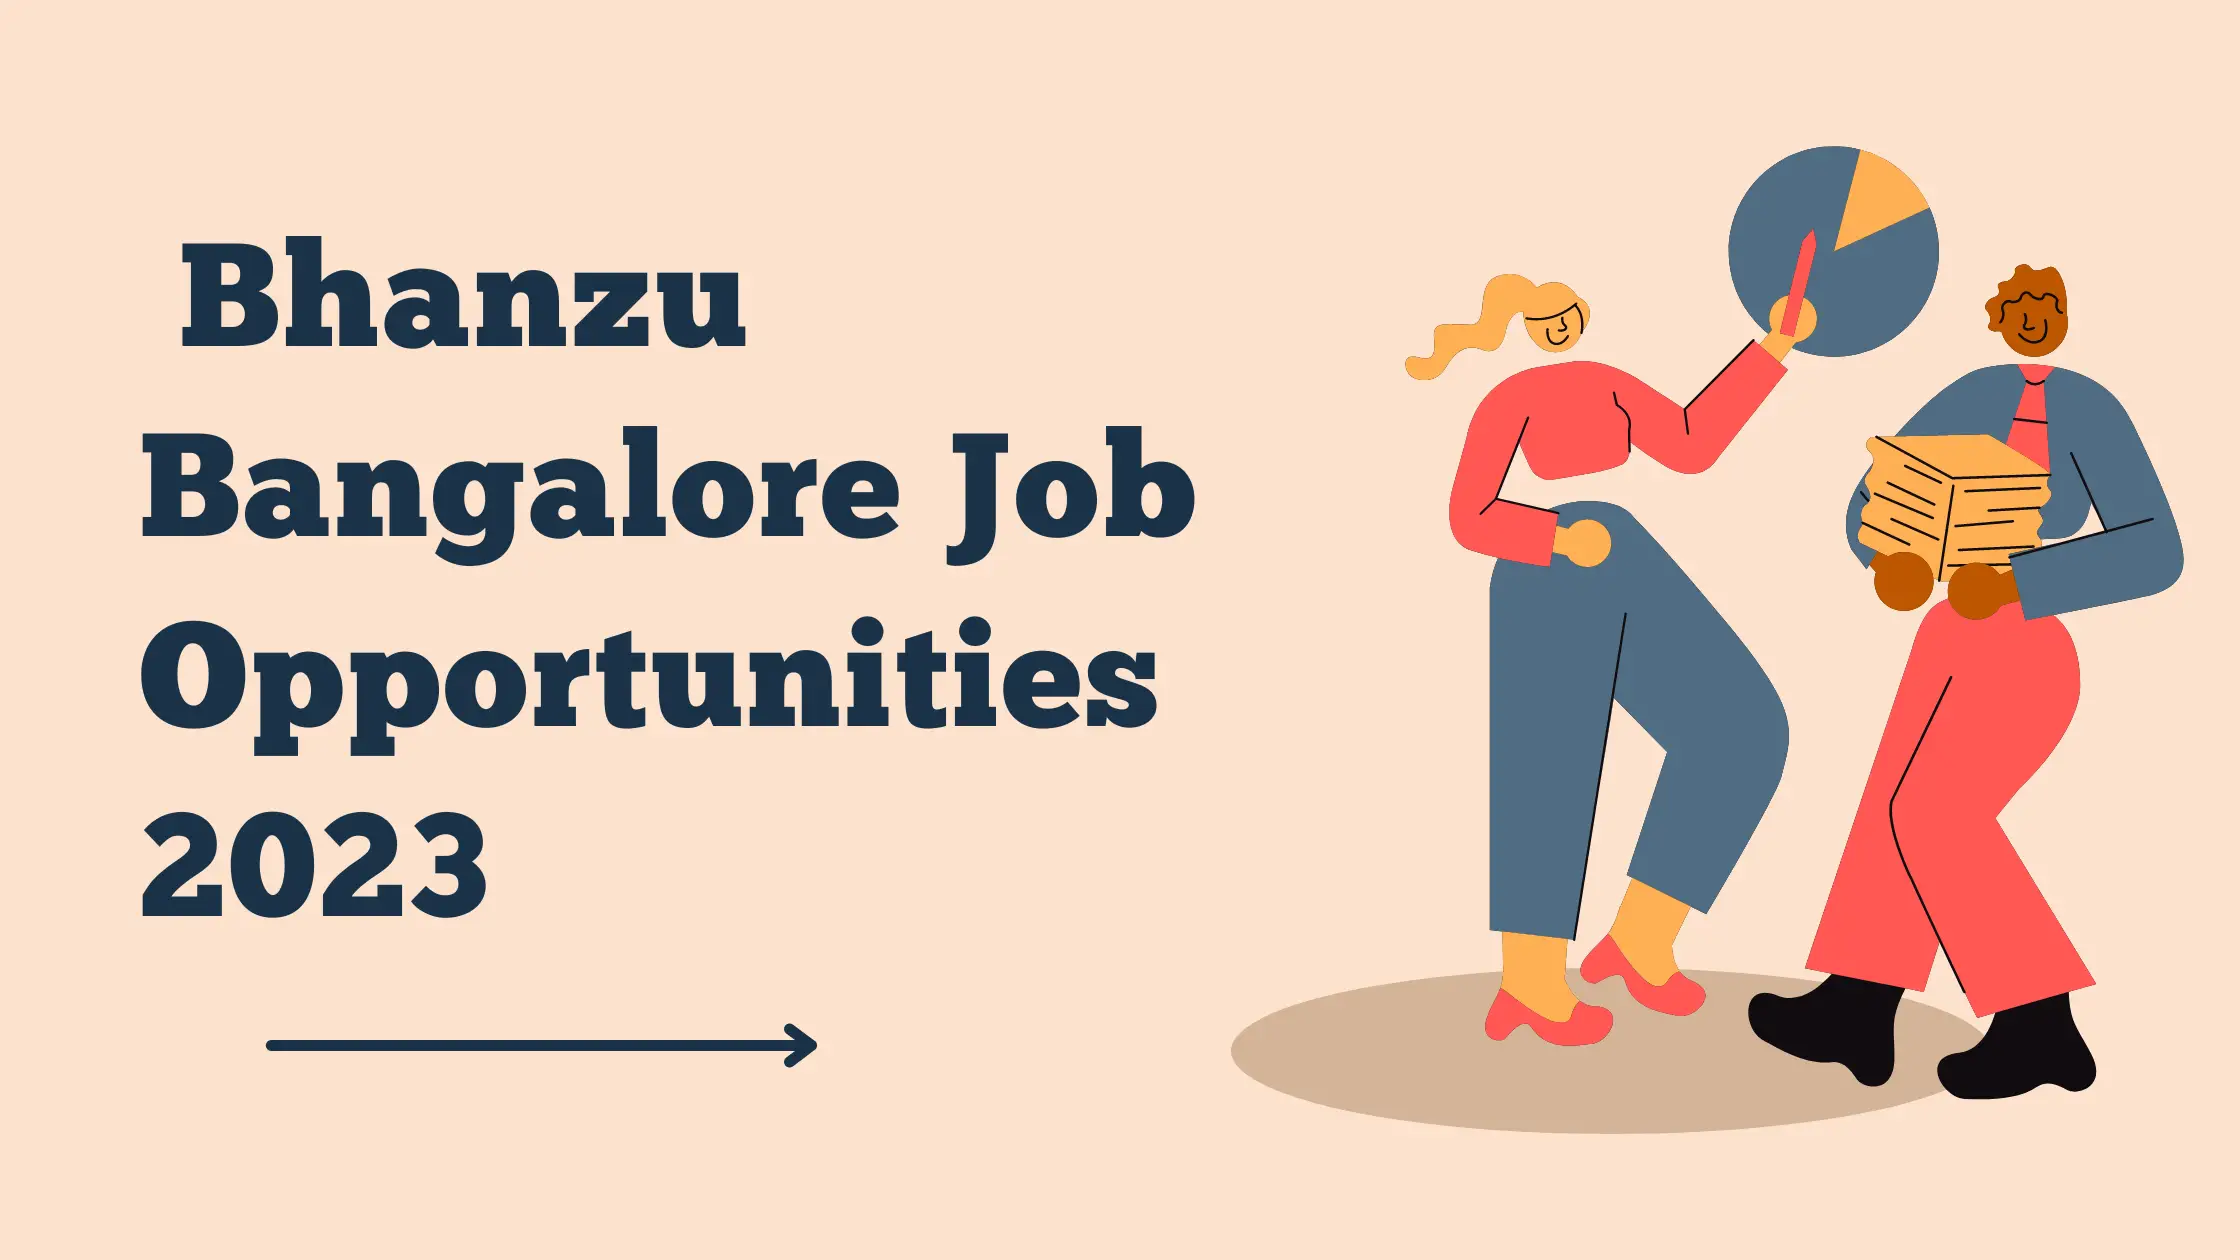 Bhanzu Community Partnership Associate: Bangalore Job Opportunities 2023 at Bhanzu